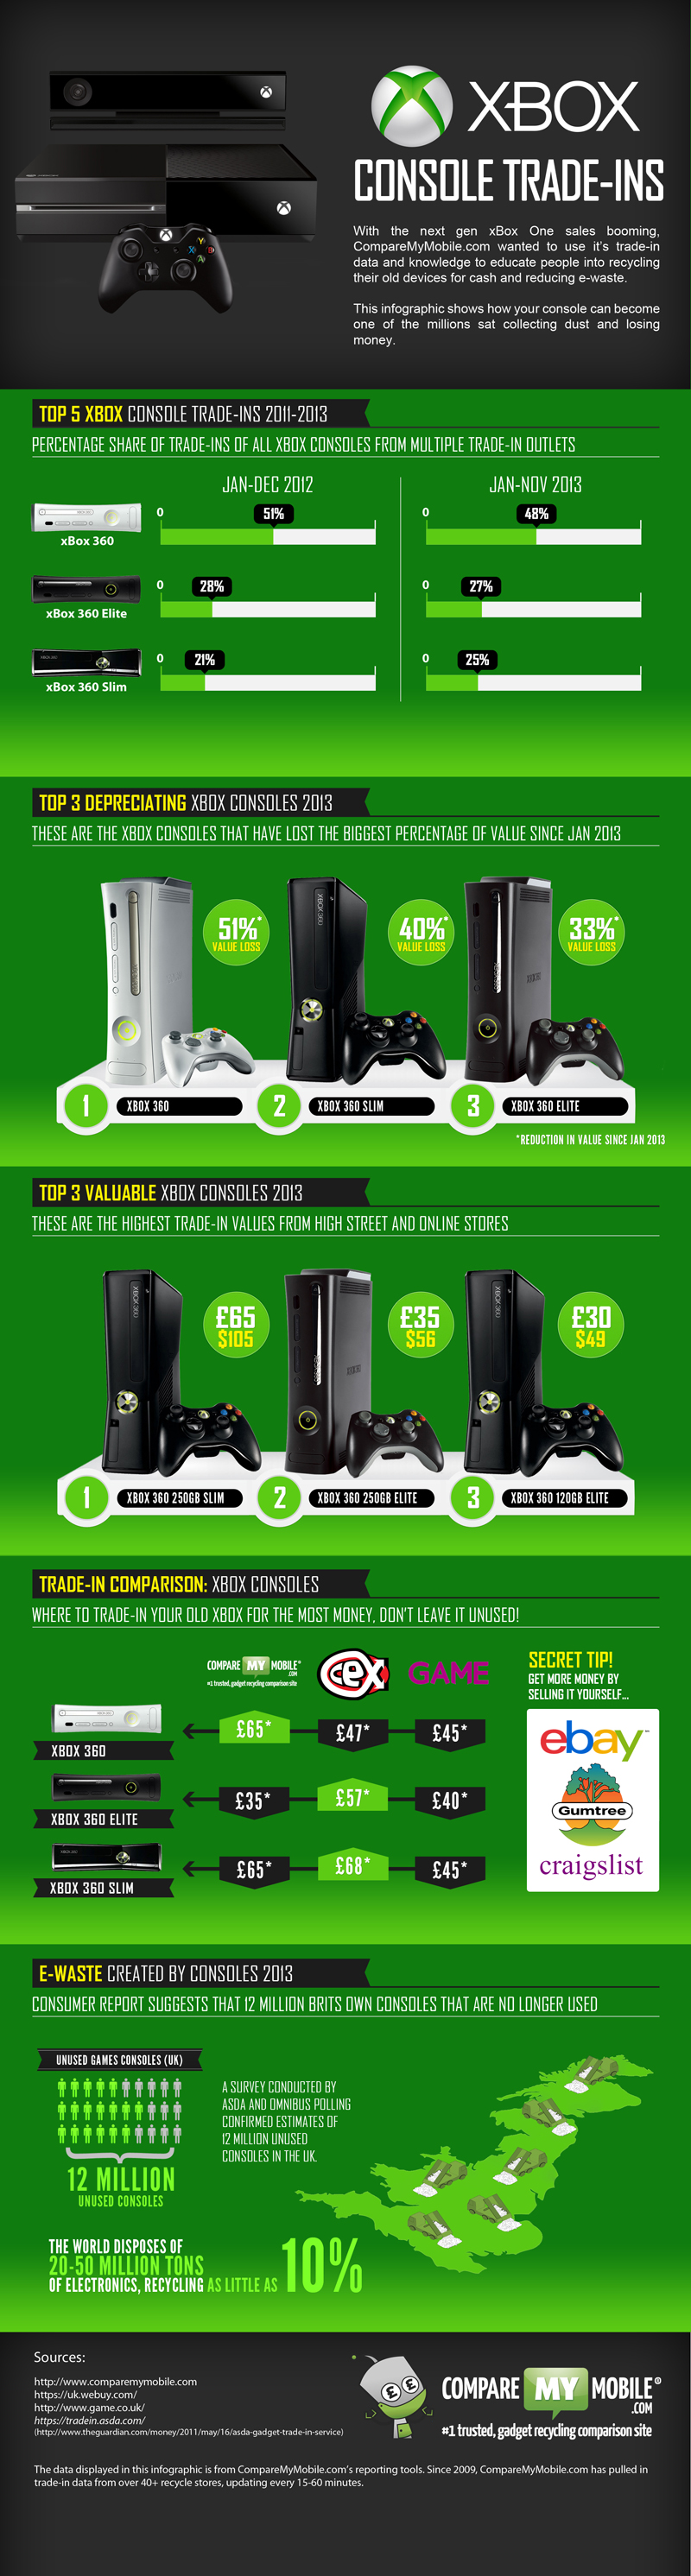 CompareMyMobile's Xbox trade-in infographic